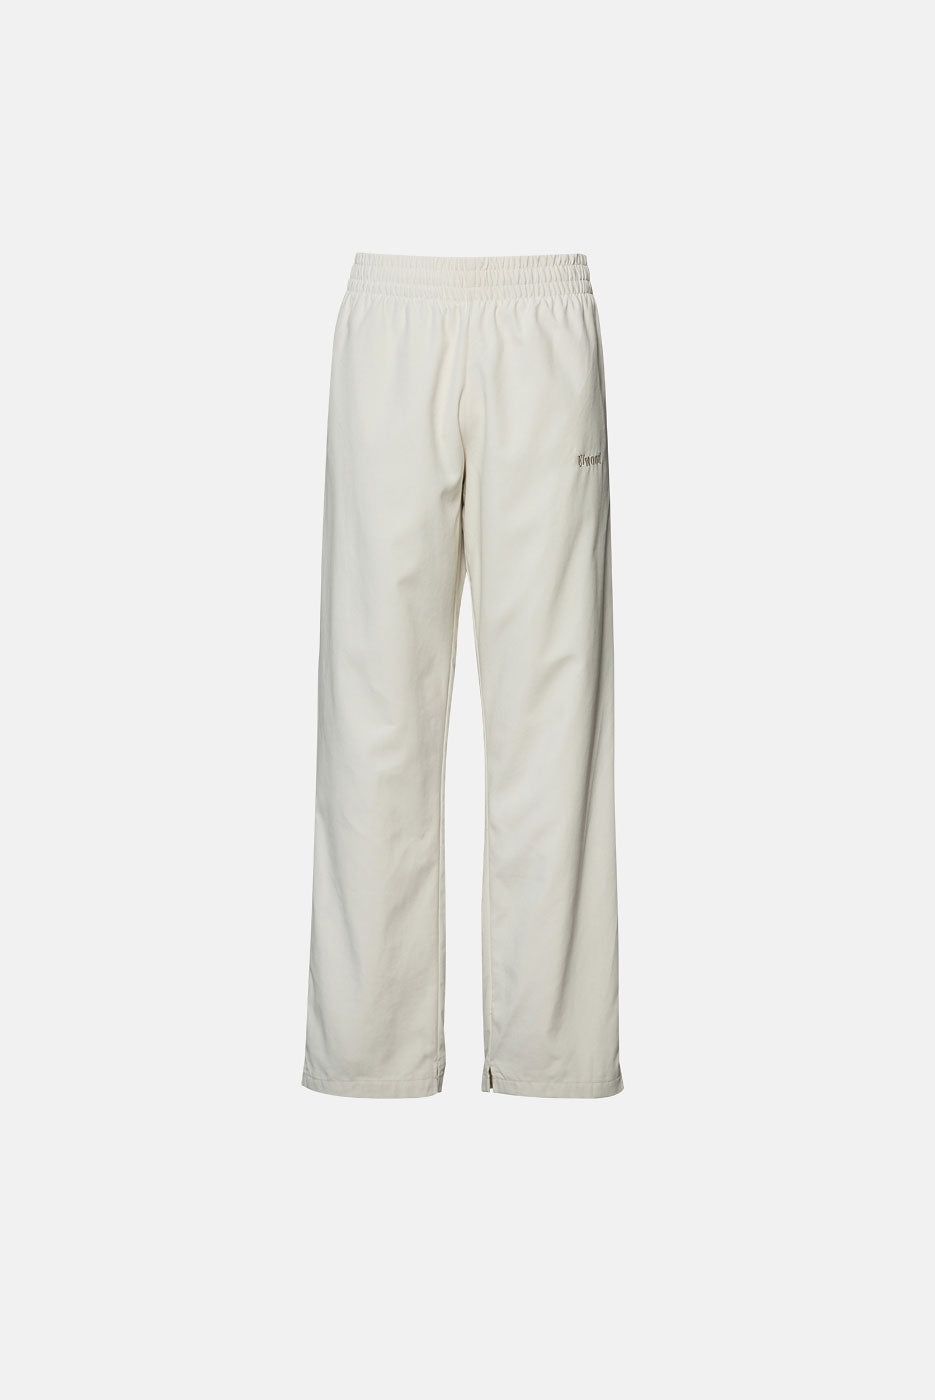 Shop Pants – Elwood Clothing